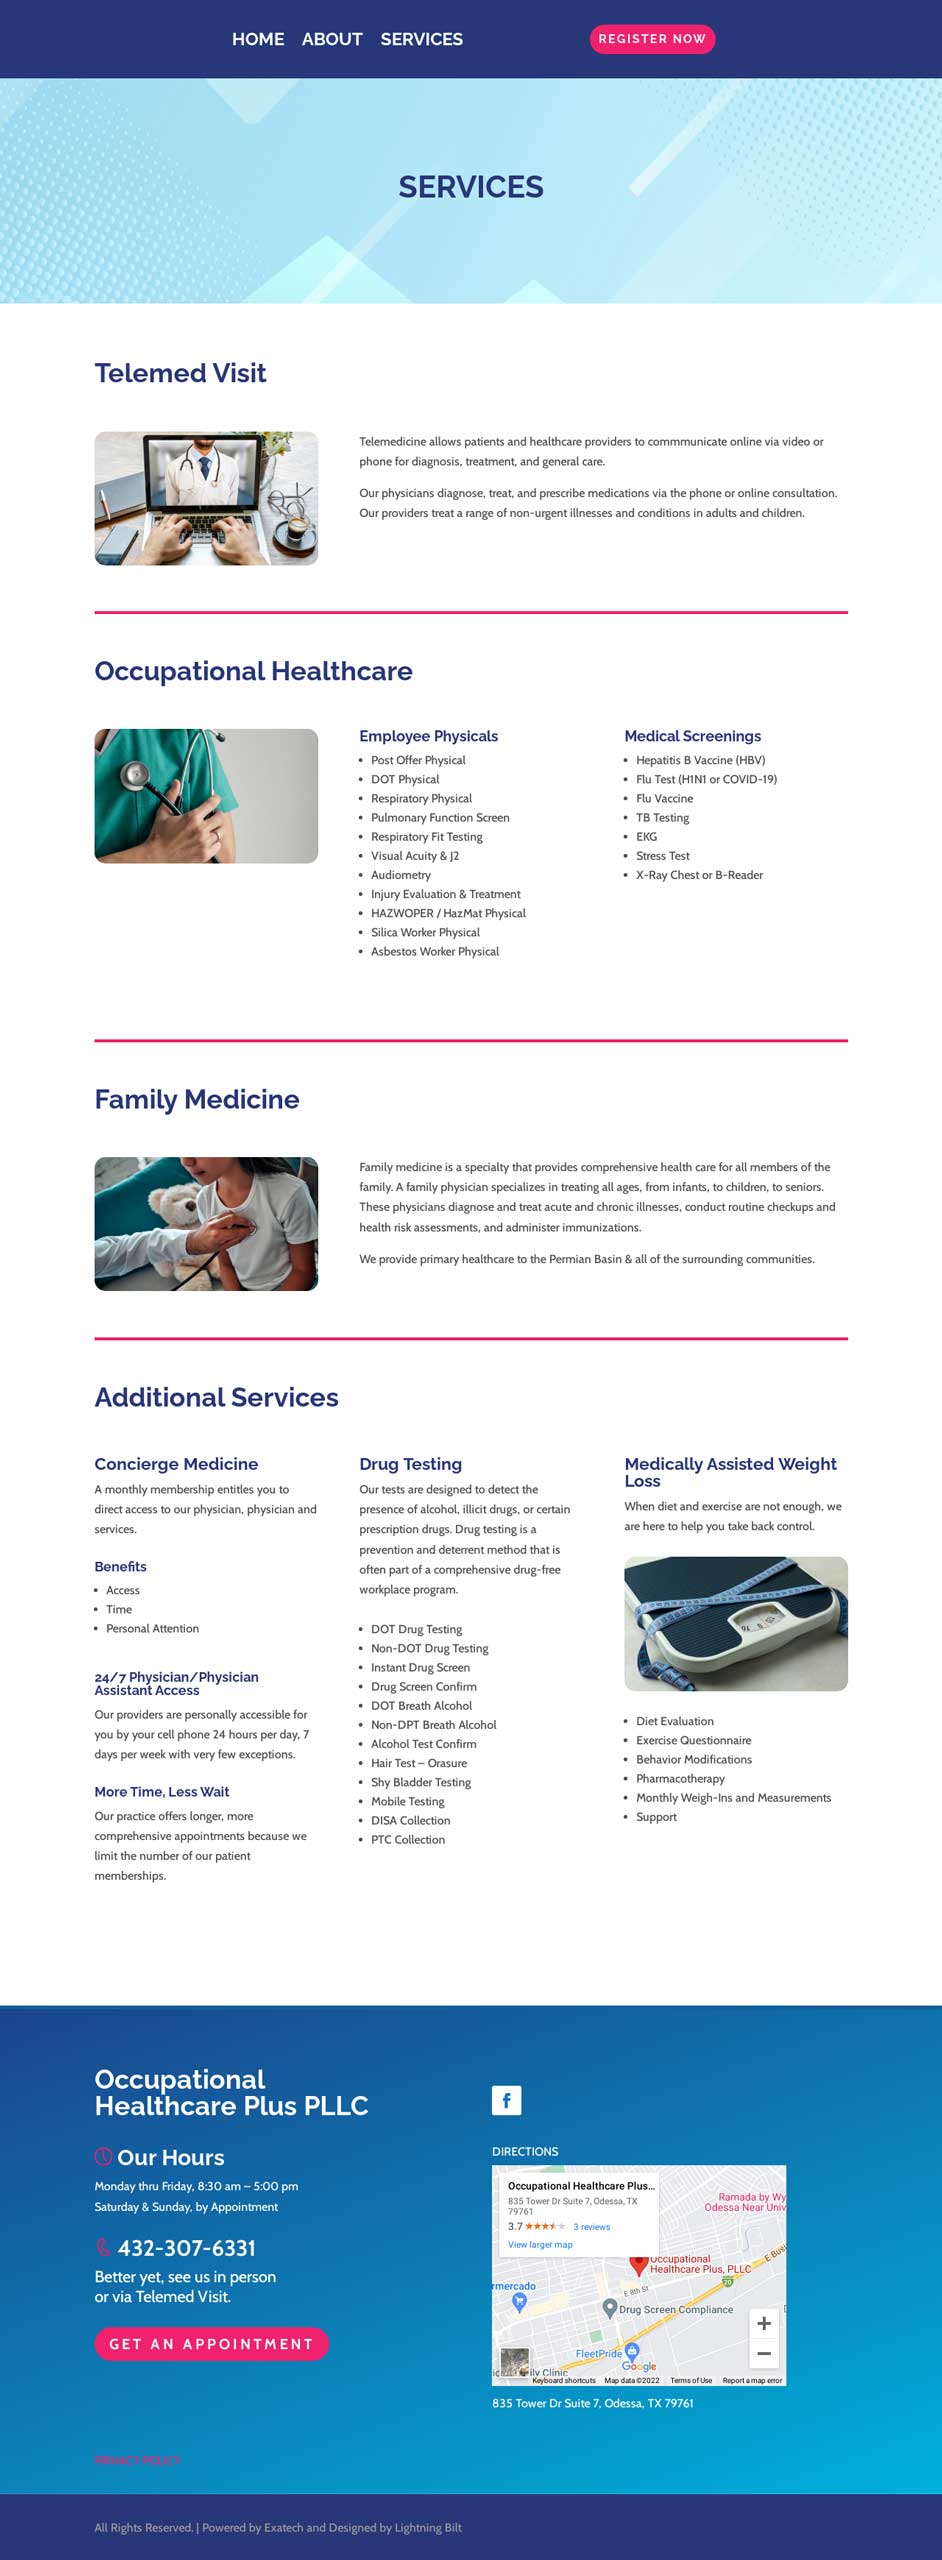 Occupational Healthcare Plus Website - Services